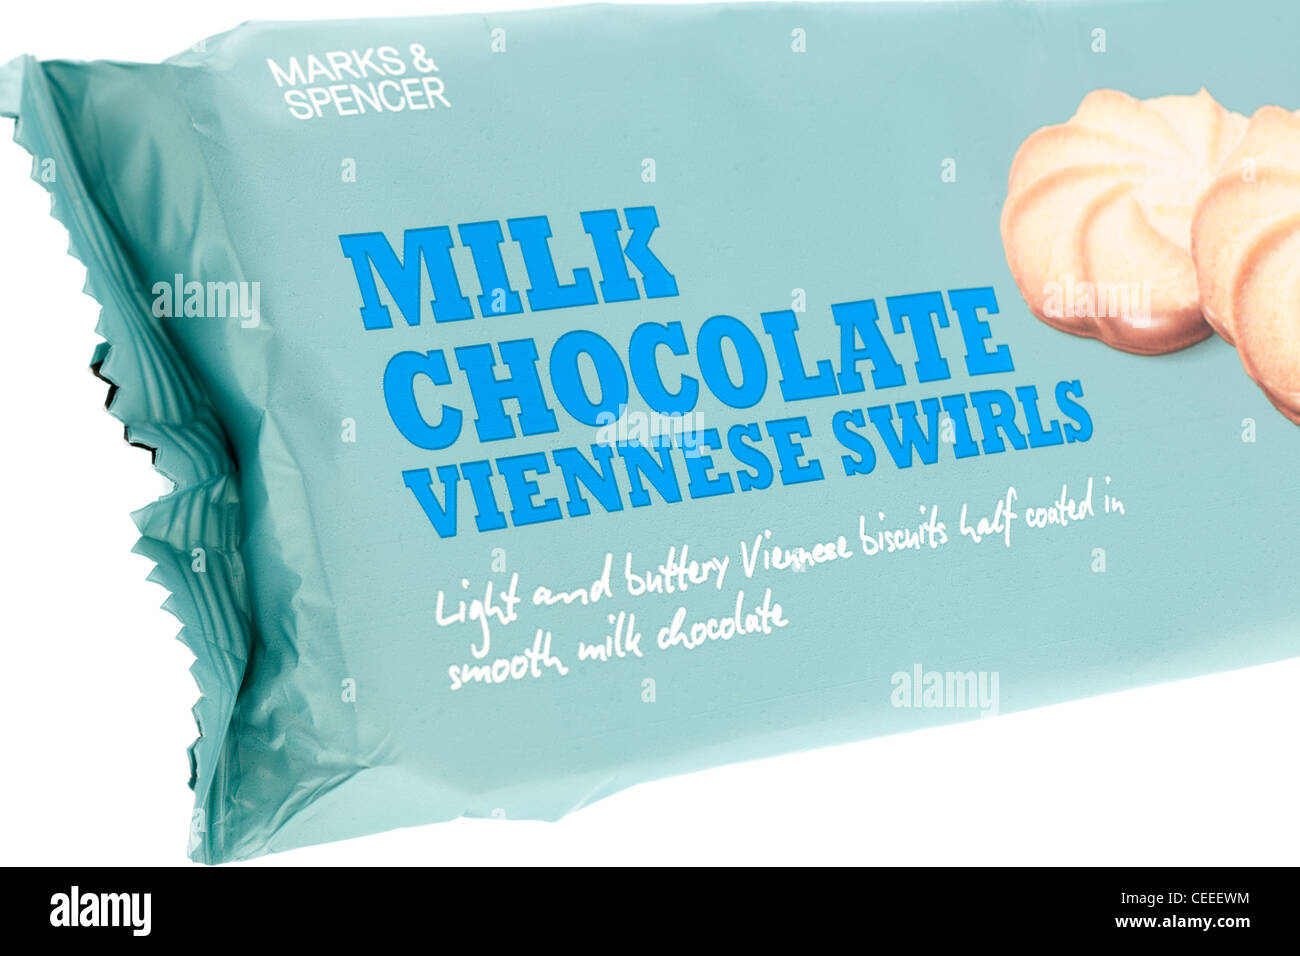 Paquete de Marks & Spencer Milk Chocolate vienés de remolinos Foto de stock